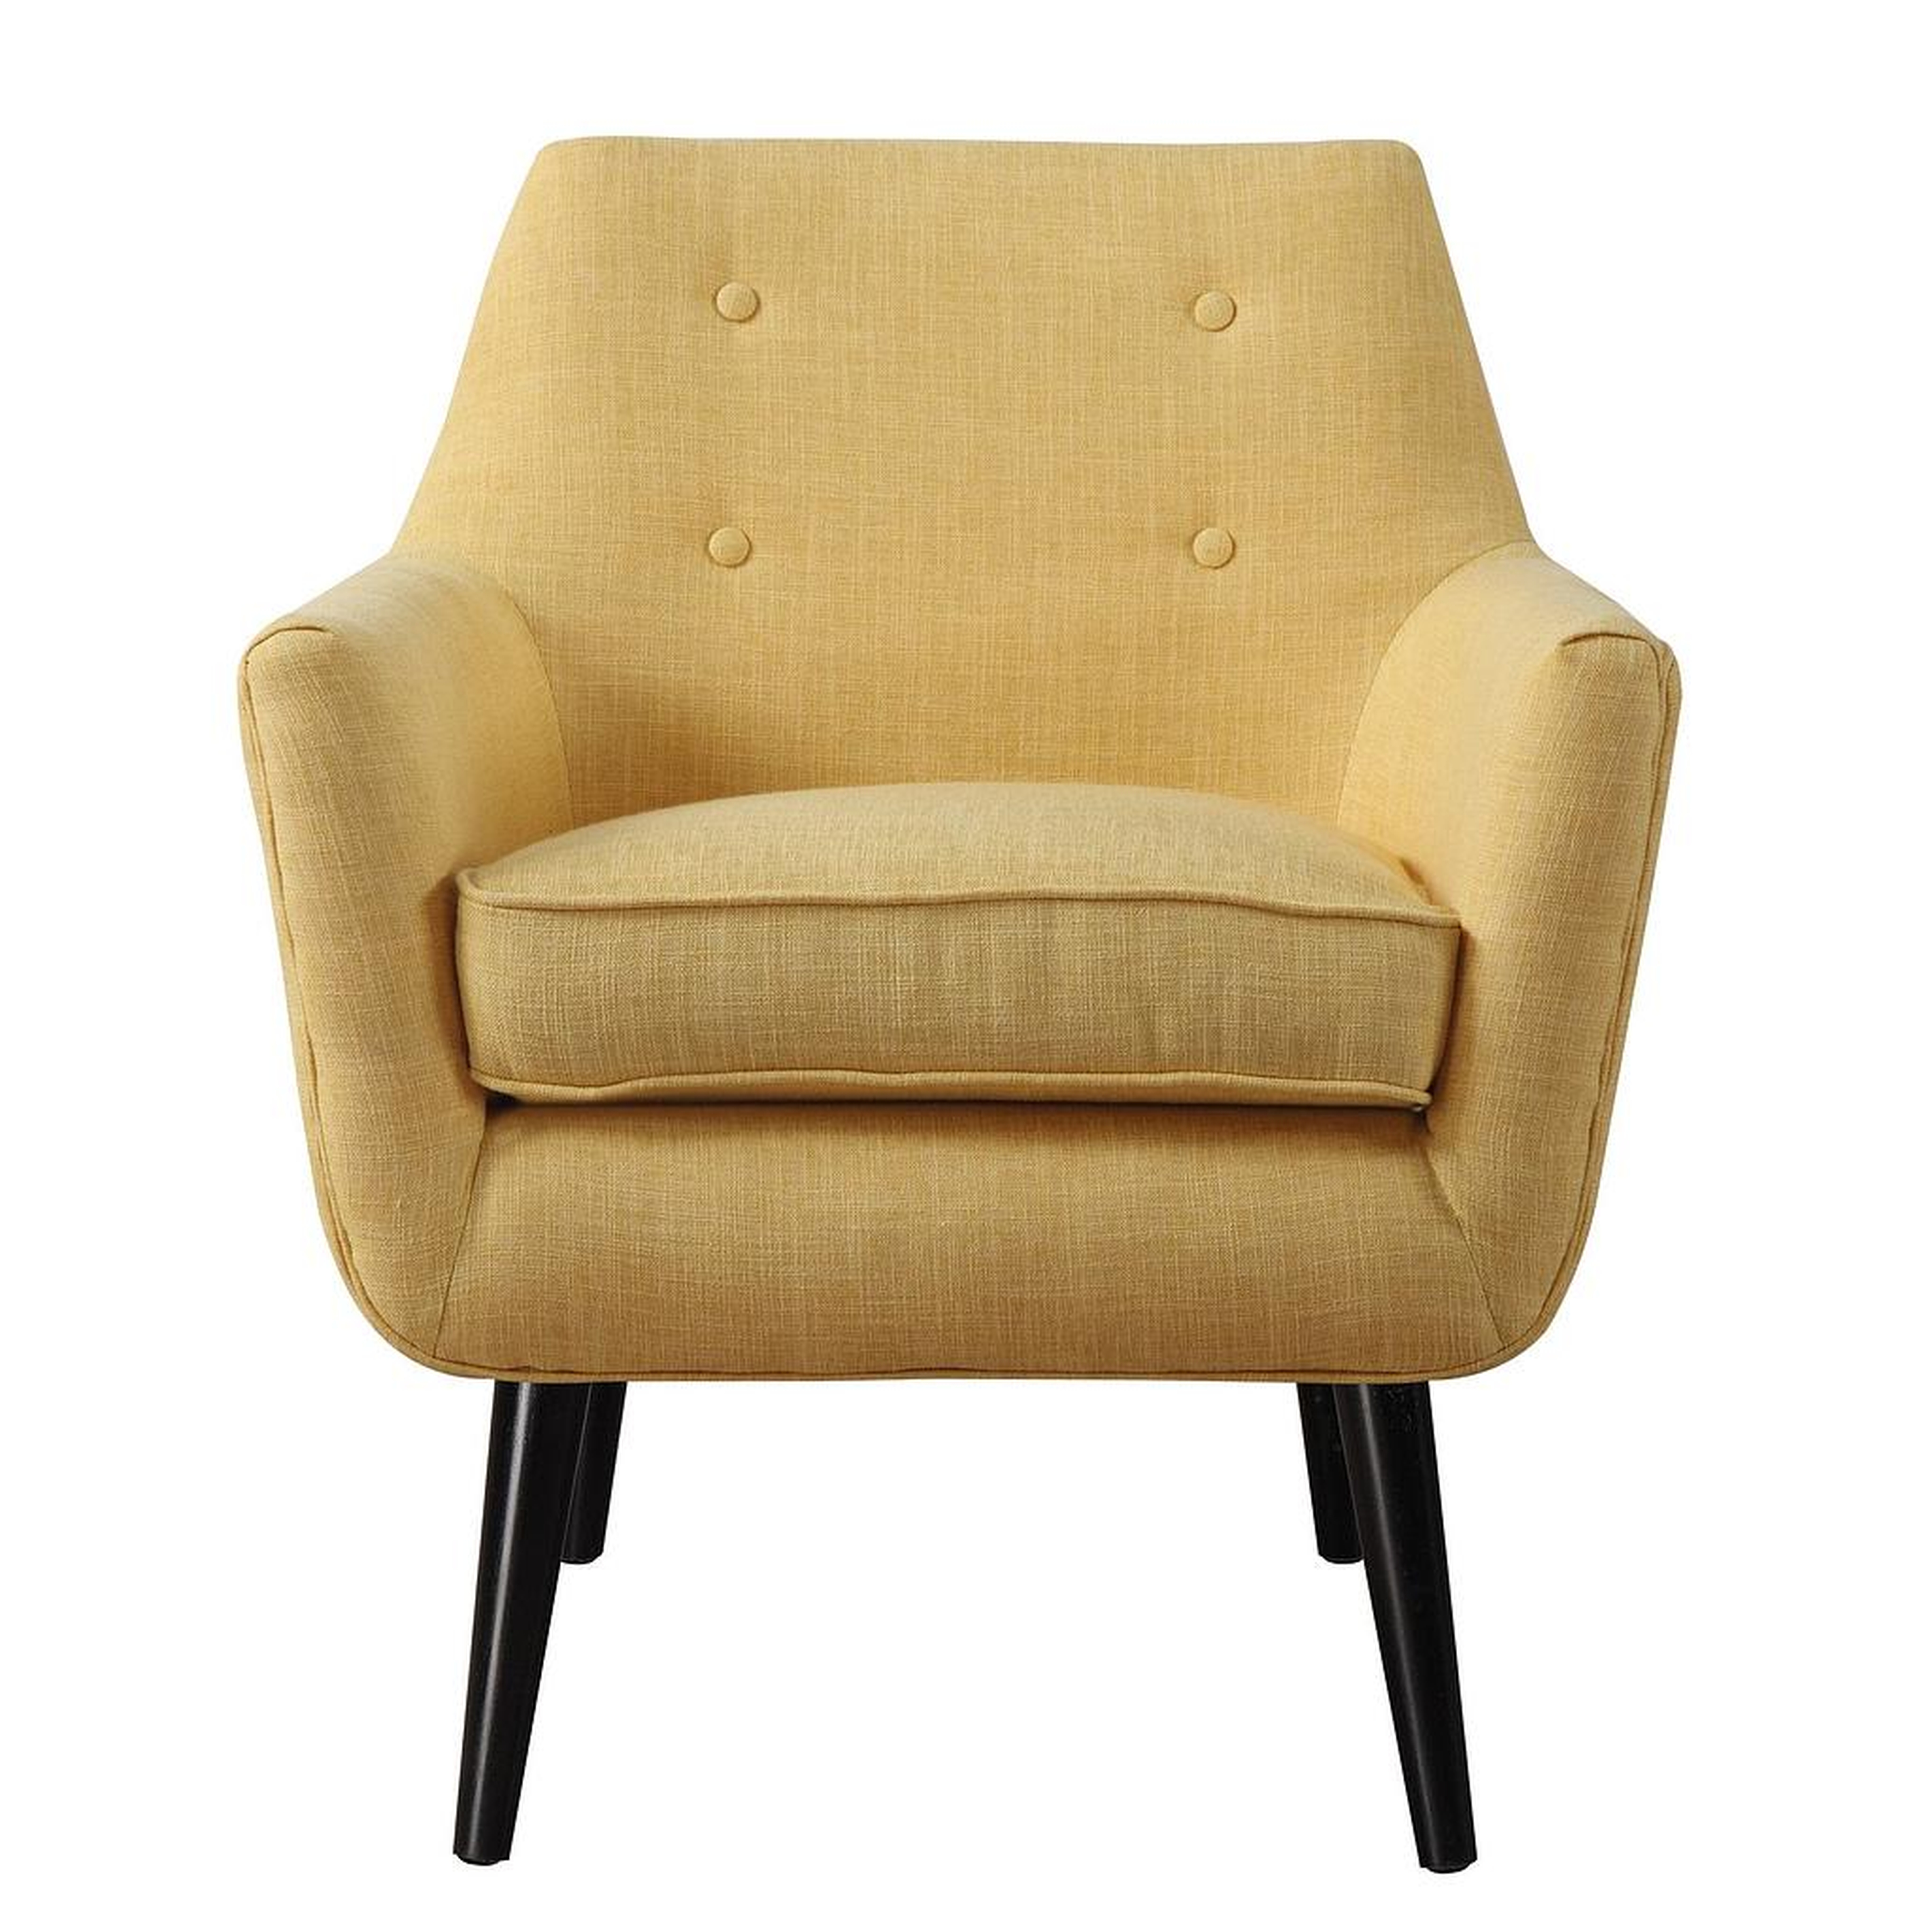 Sadie Mustard Yellow Linen Chair - TOV FURNITURE